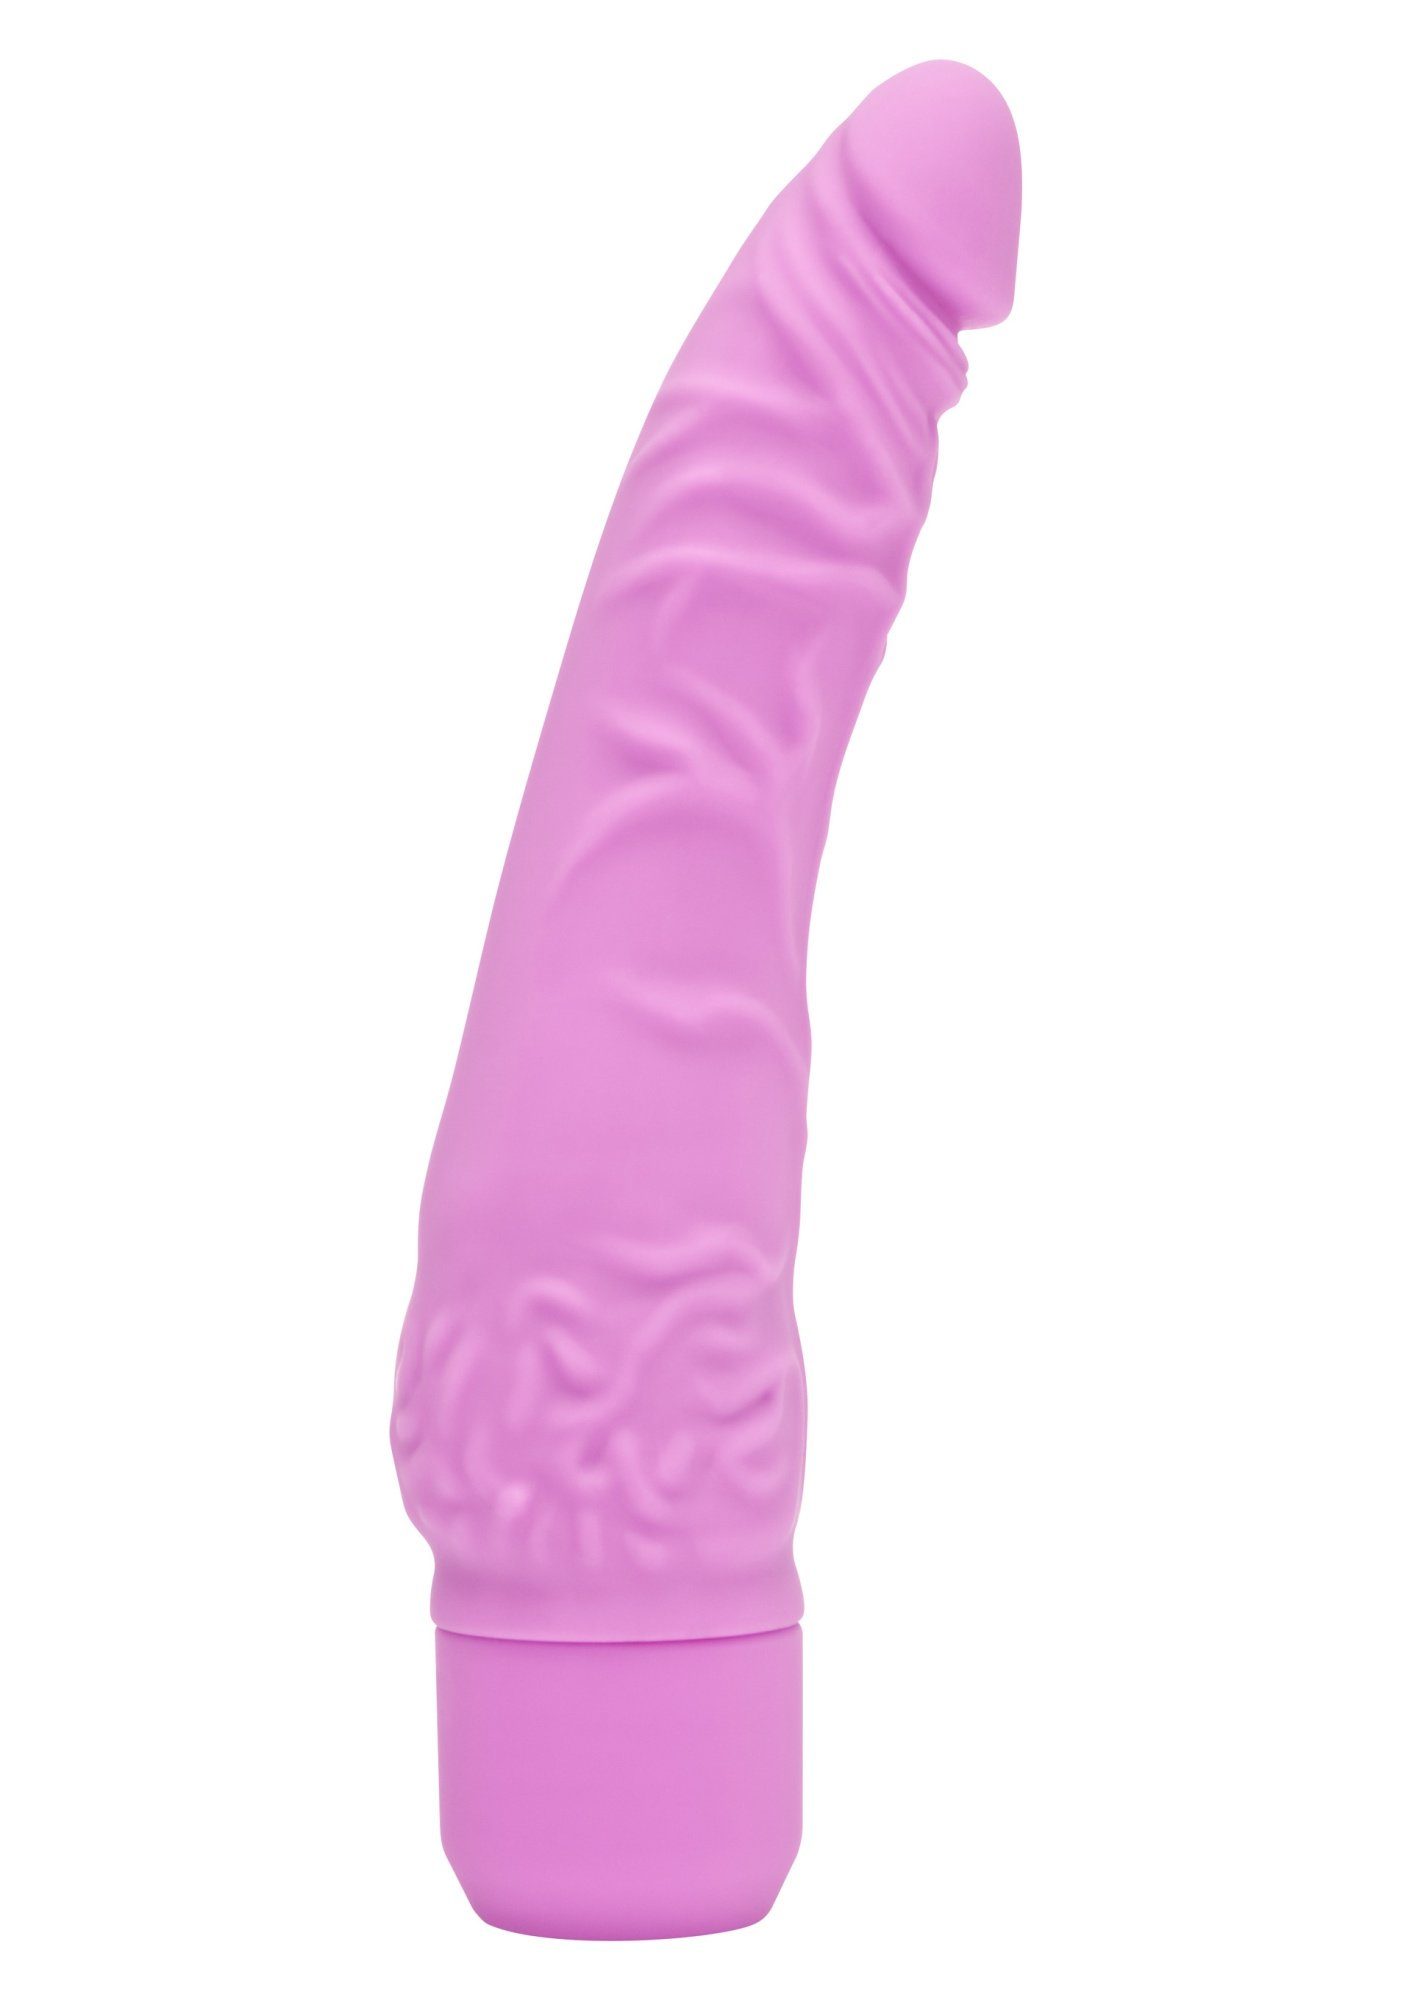 TOYJOY Vibrator Classic Slim Vibrator - pink